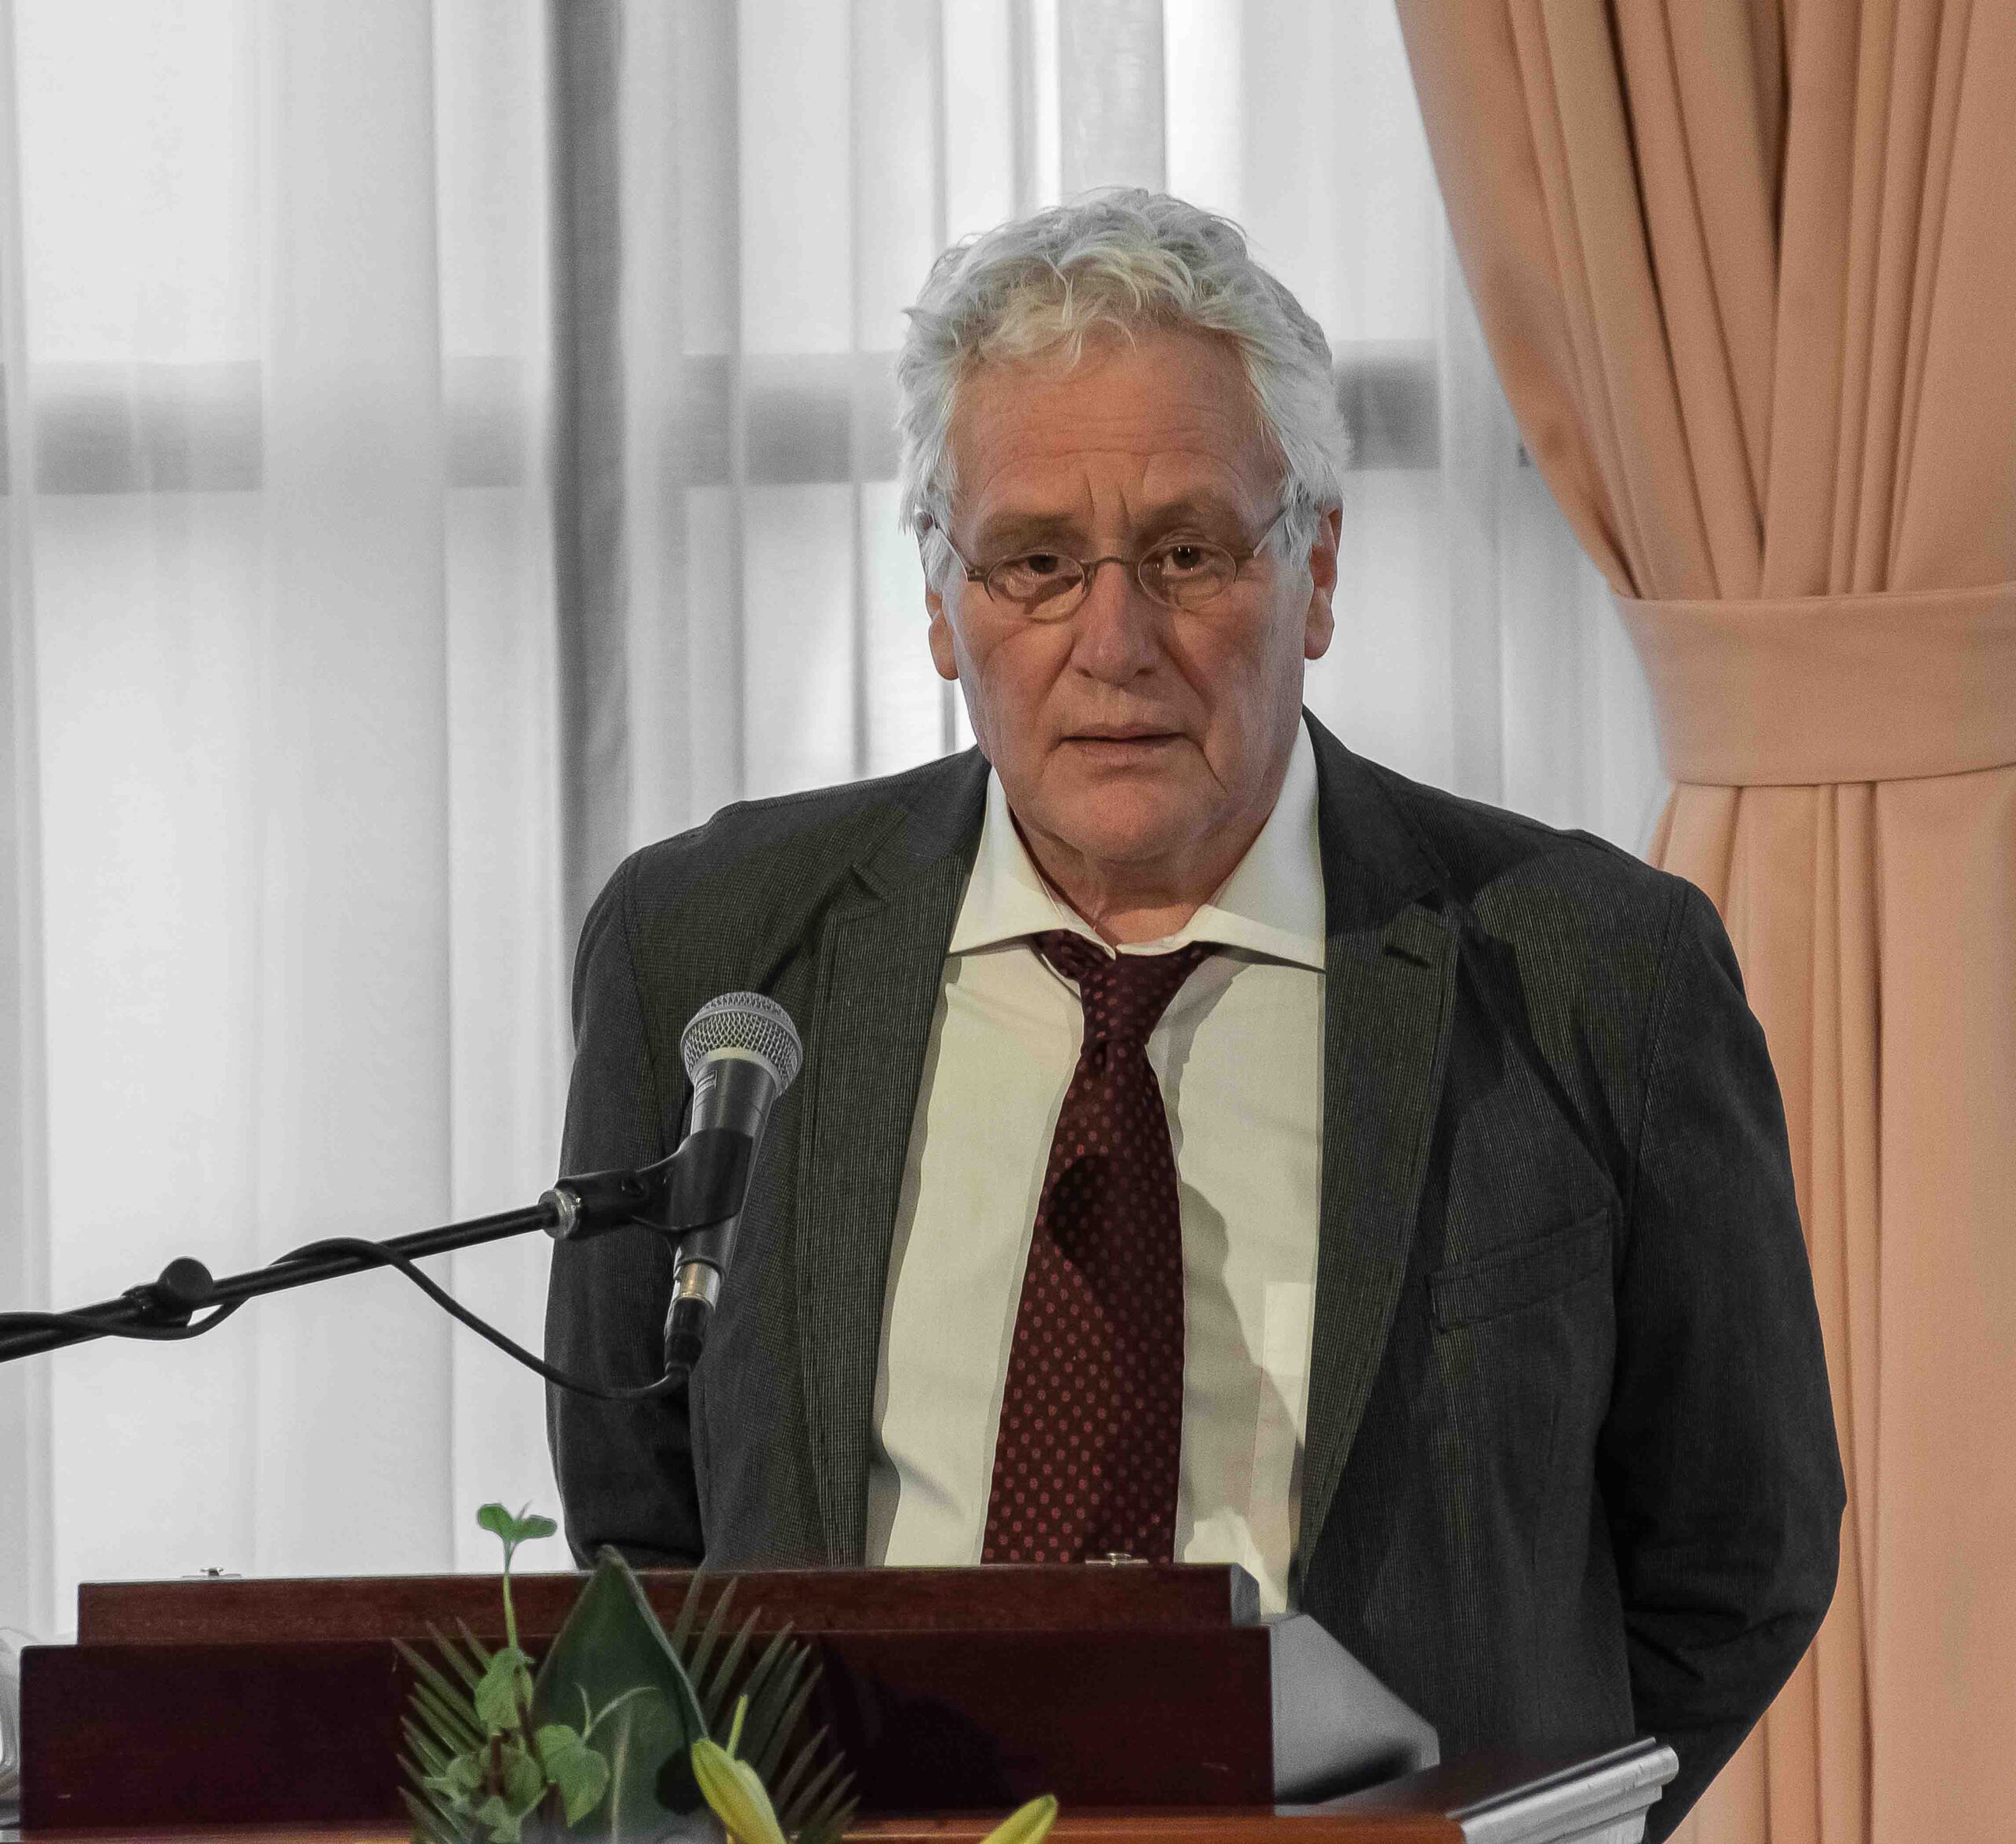 Hartmut Boger, director of the Wiesbaden Adult Education Center, delivers the laudatory speech. Photographer: Igor Eisenschtat. Collection Jewish Community Wiesbaden